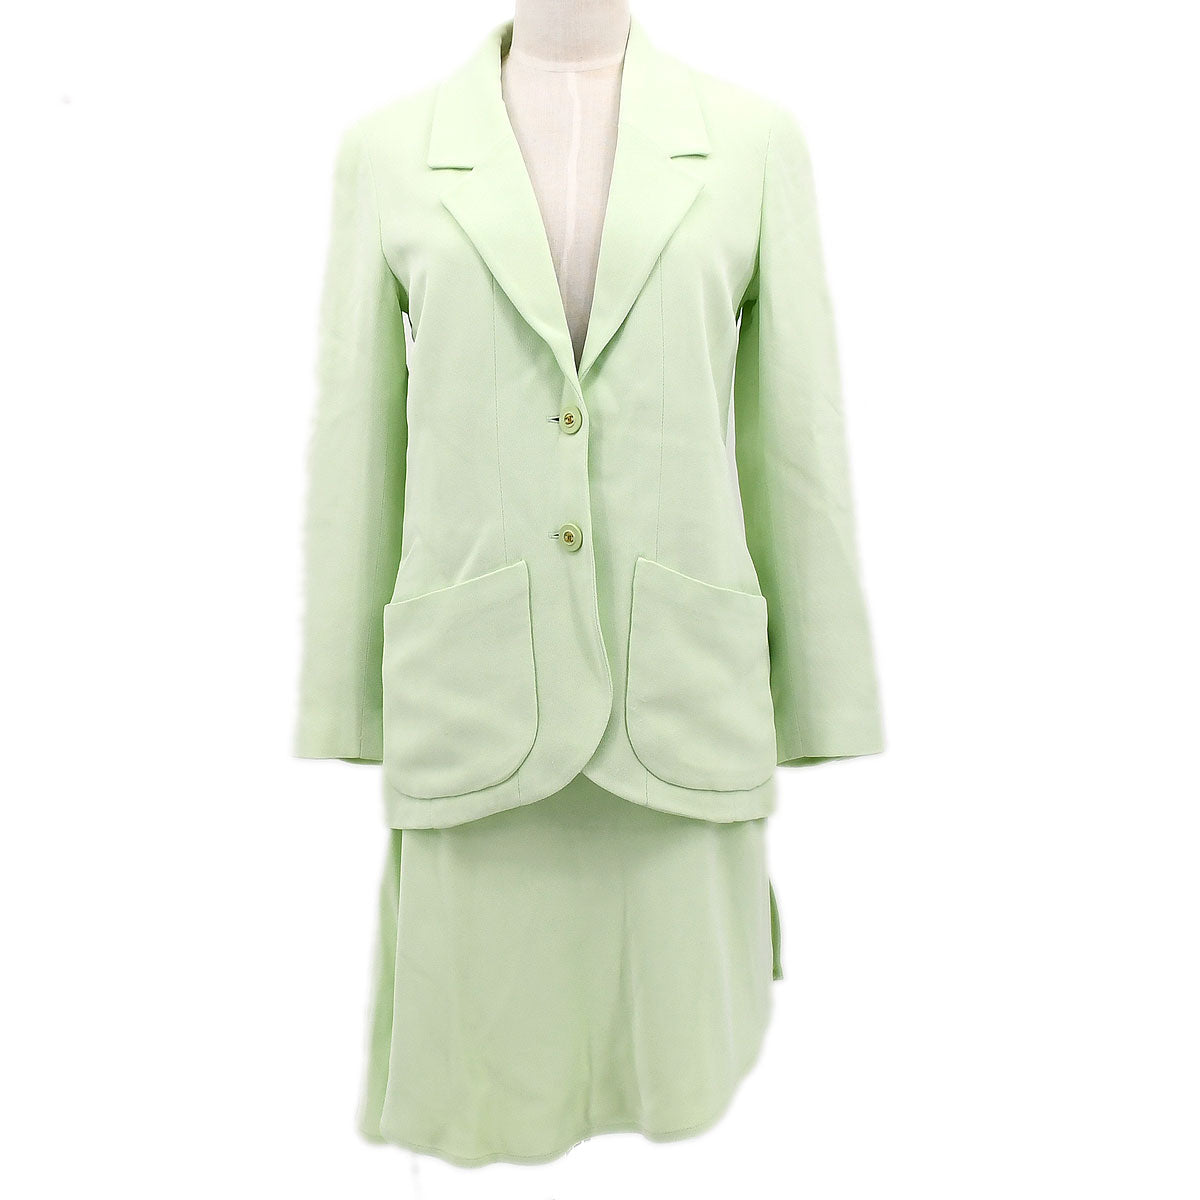 Chanel Spring 1994 jacket skirt suit 